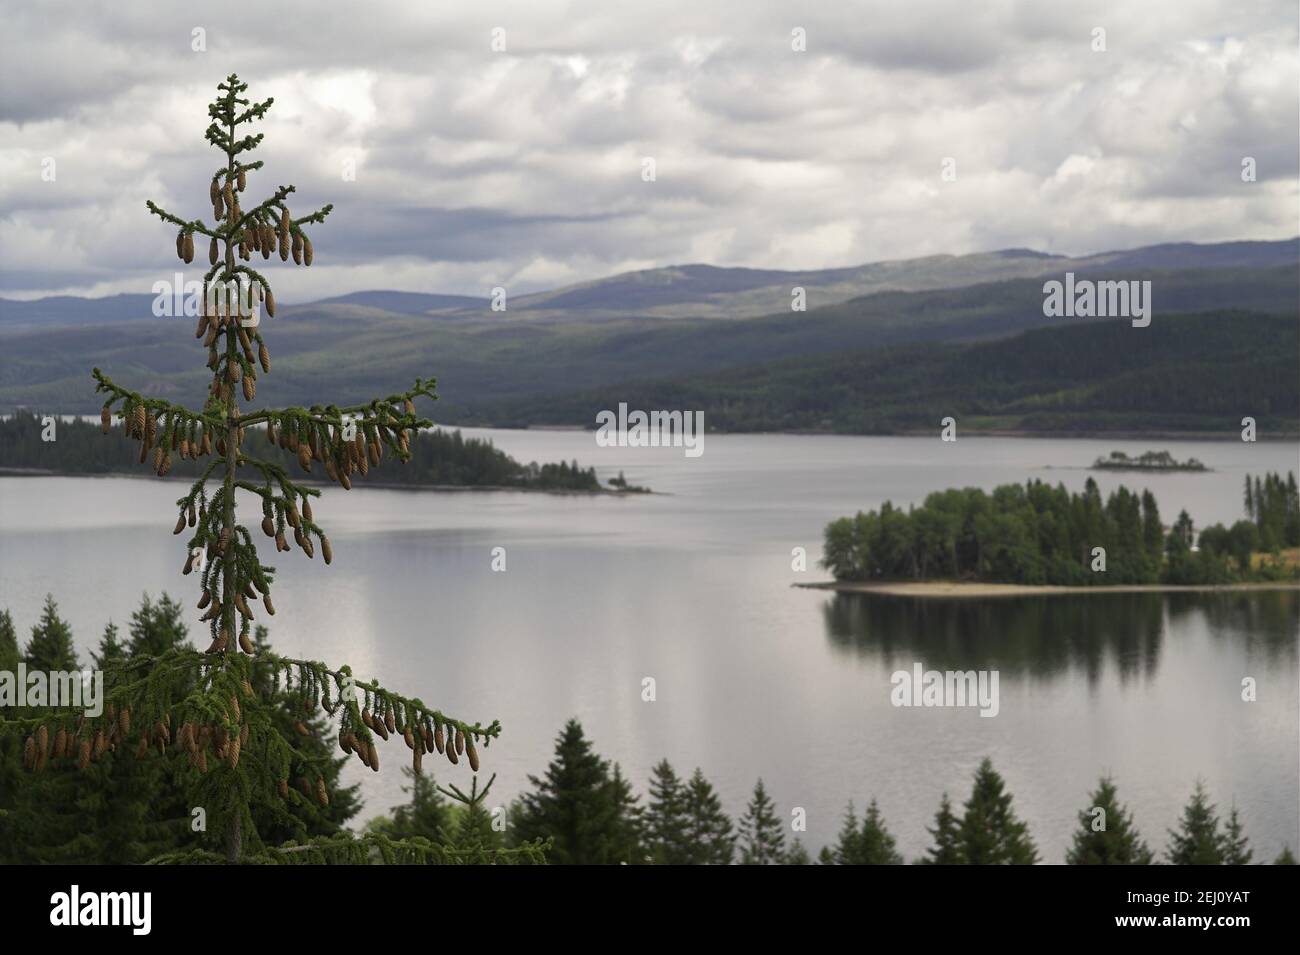 Norway, Norwegen; Lakes and hills surrounded by greenery - a typical summer landscape of central Norway. Eine typische Landschaft Mittelnorwegens. Stock Photo